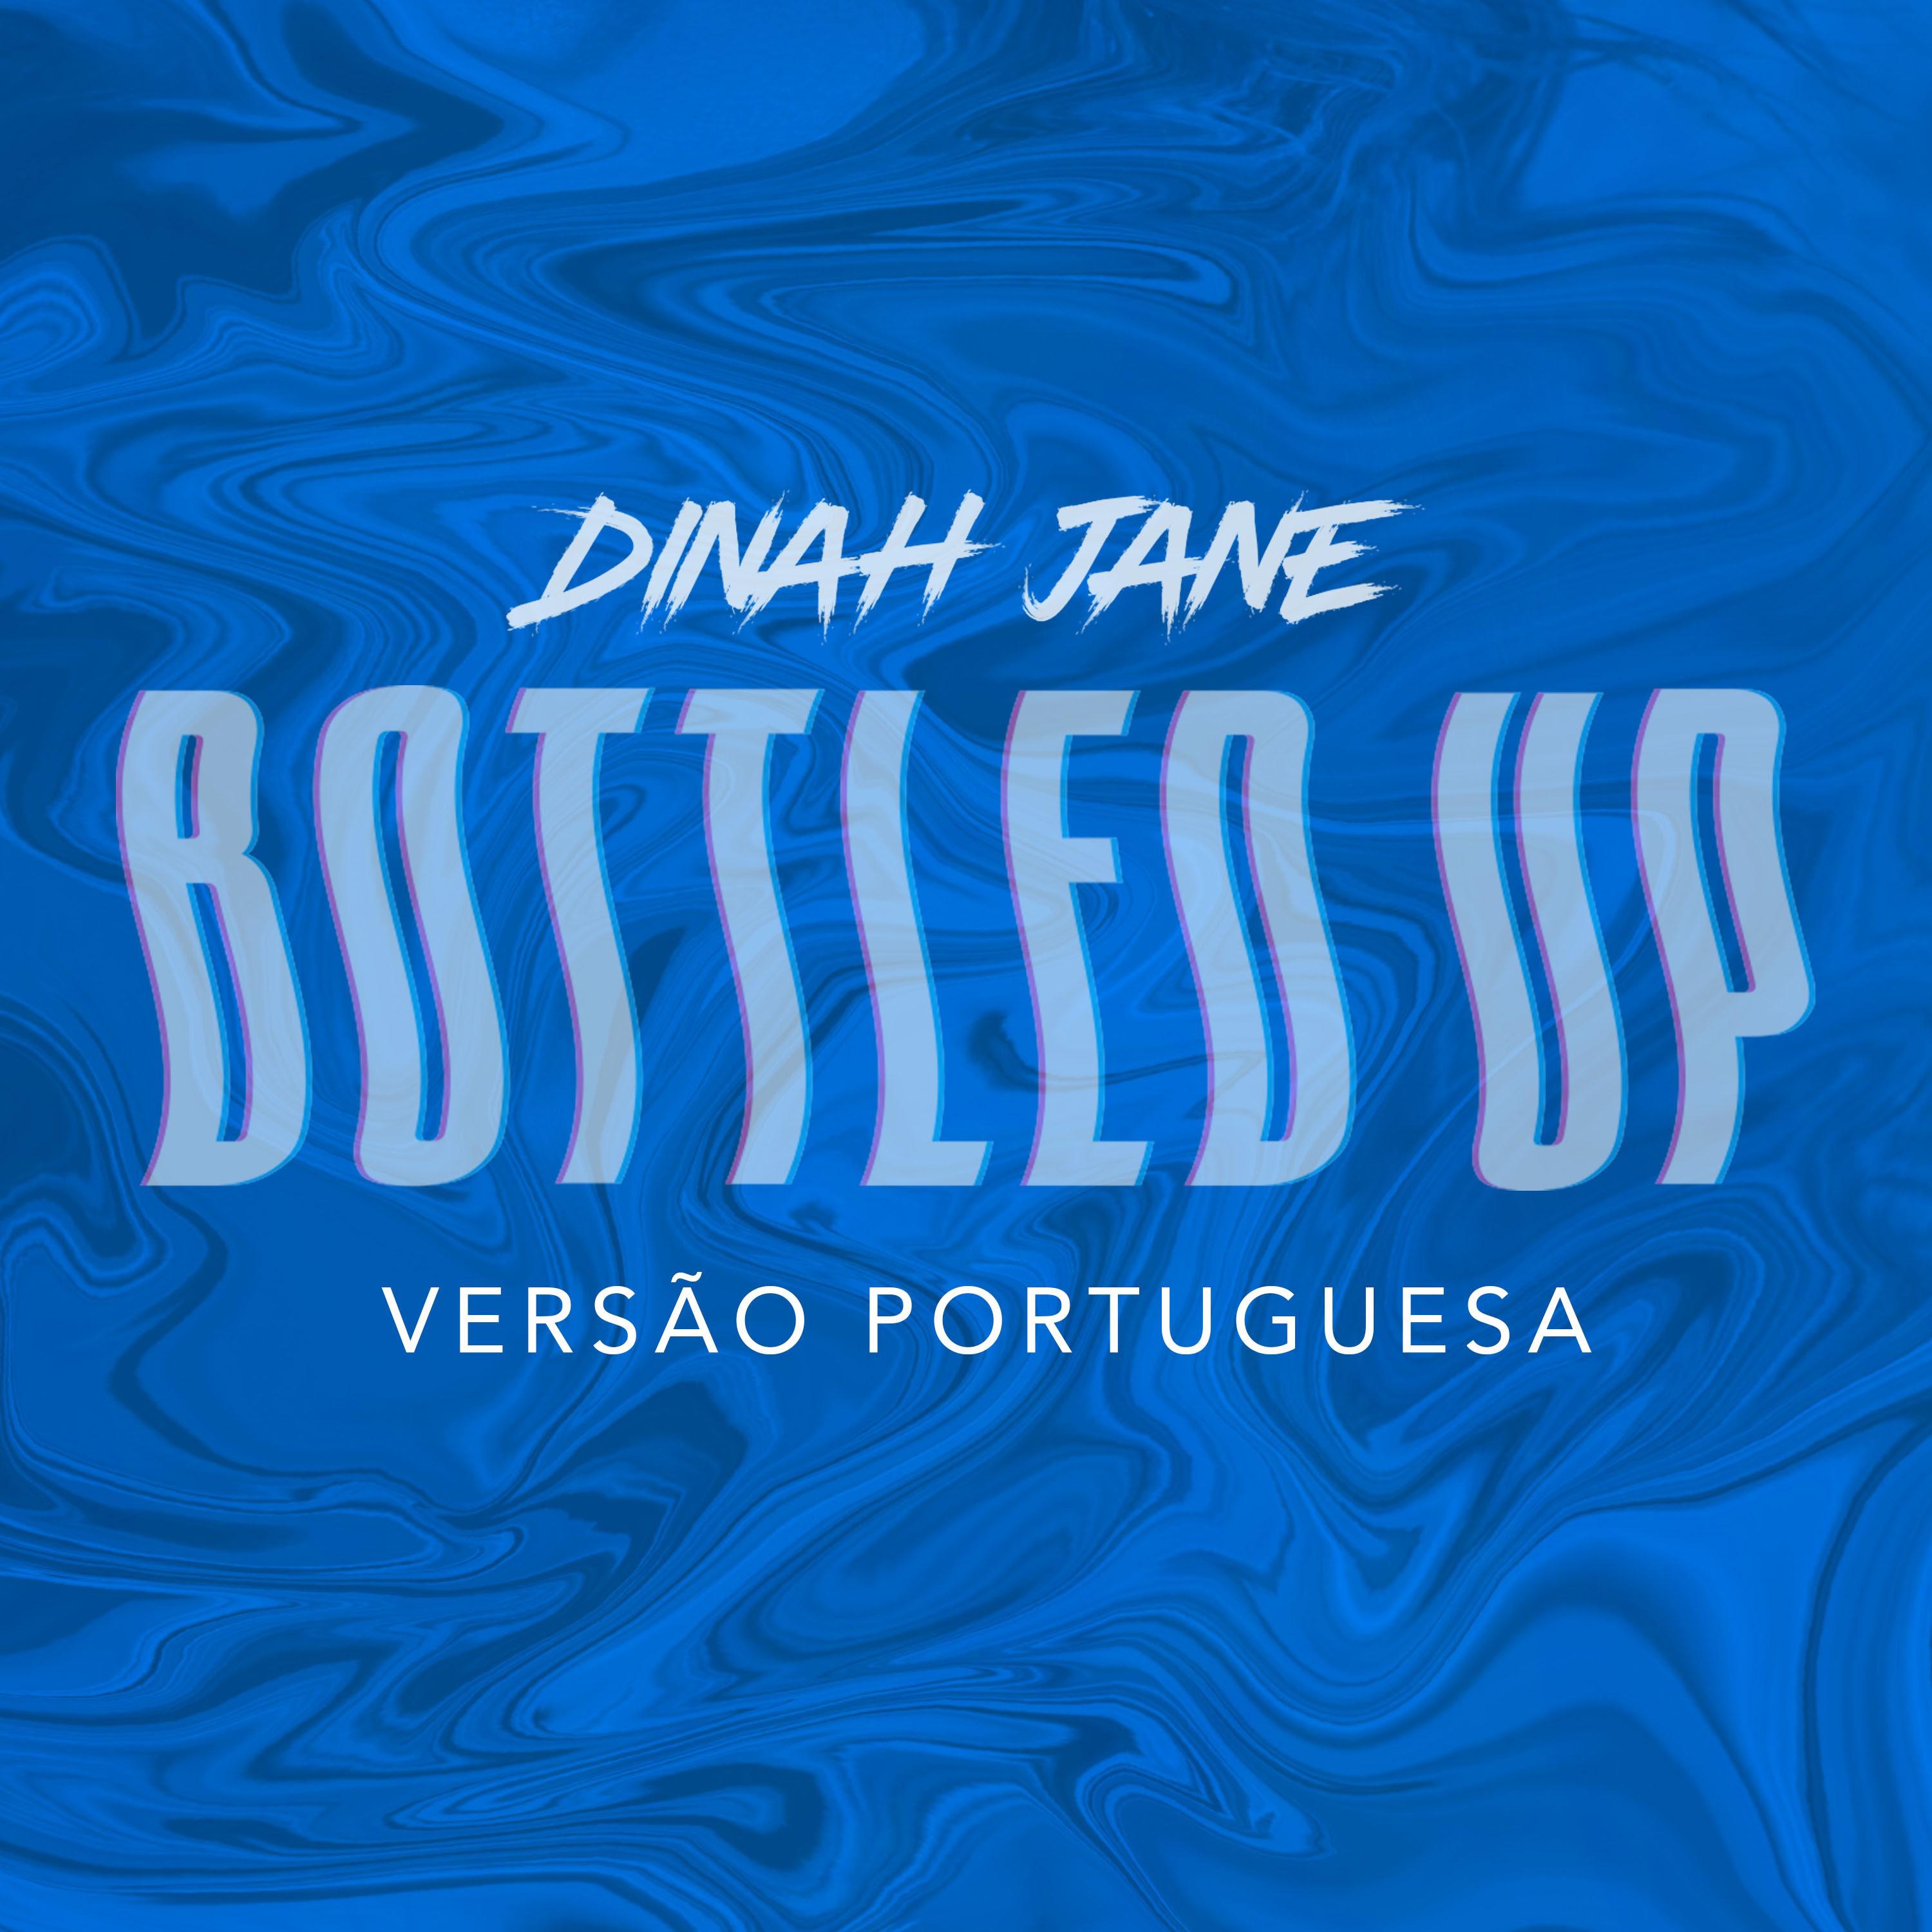 Bottled Up Vers o Portuguesa